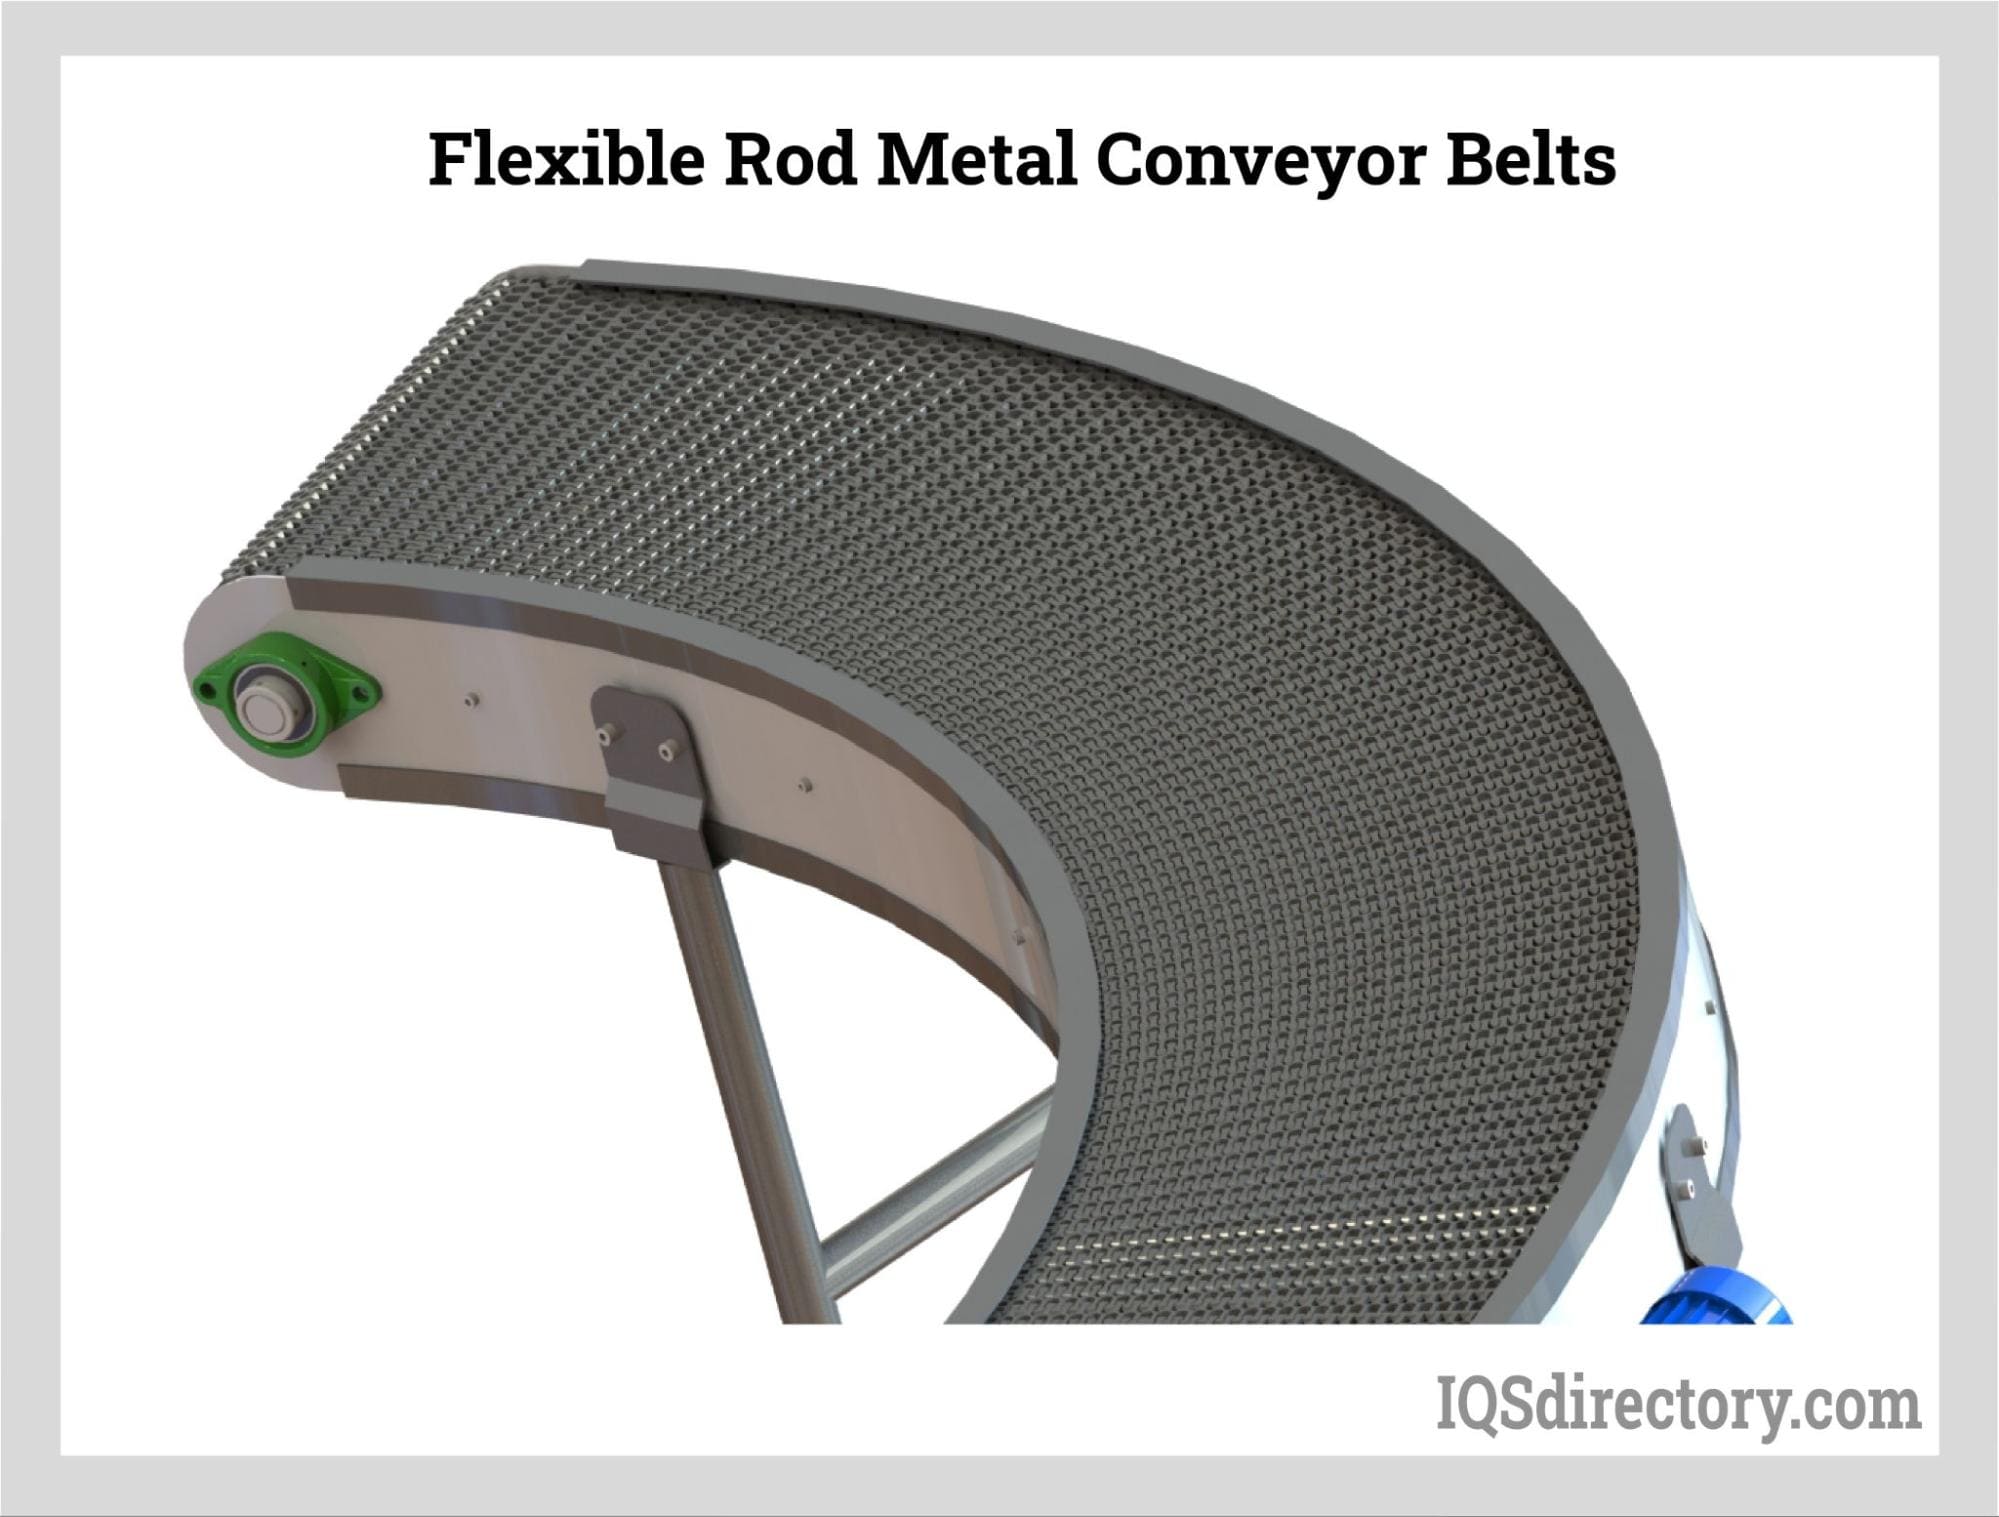 Flexible Rod Metal Conveyor Belts